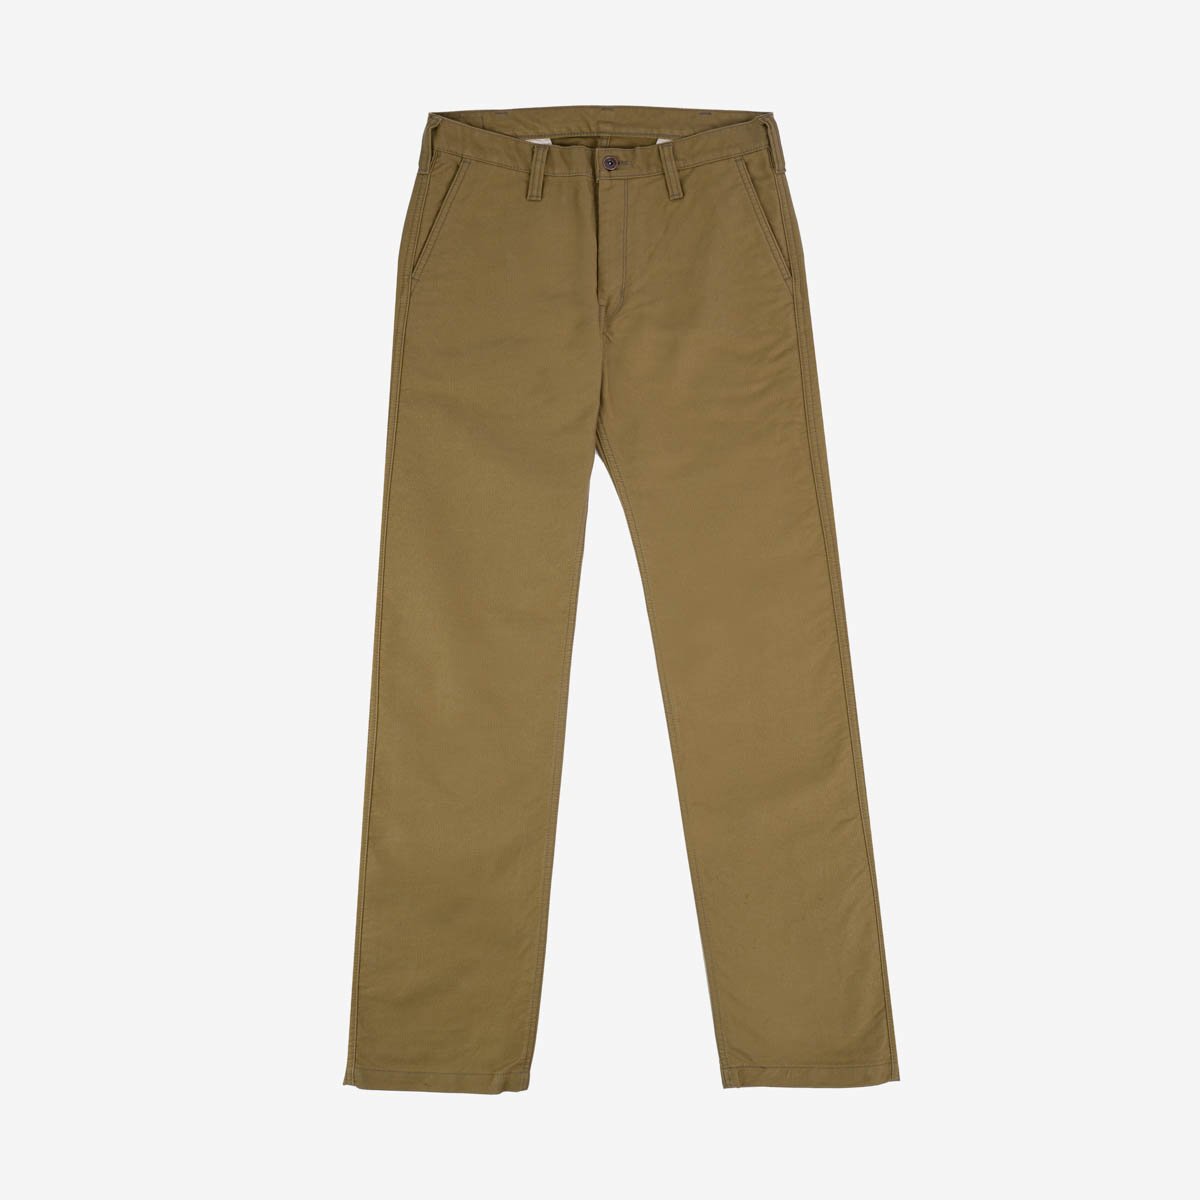 Buy Granola Khaki Slim Fit Cotton Chino Pants Online at Bewakoof